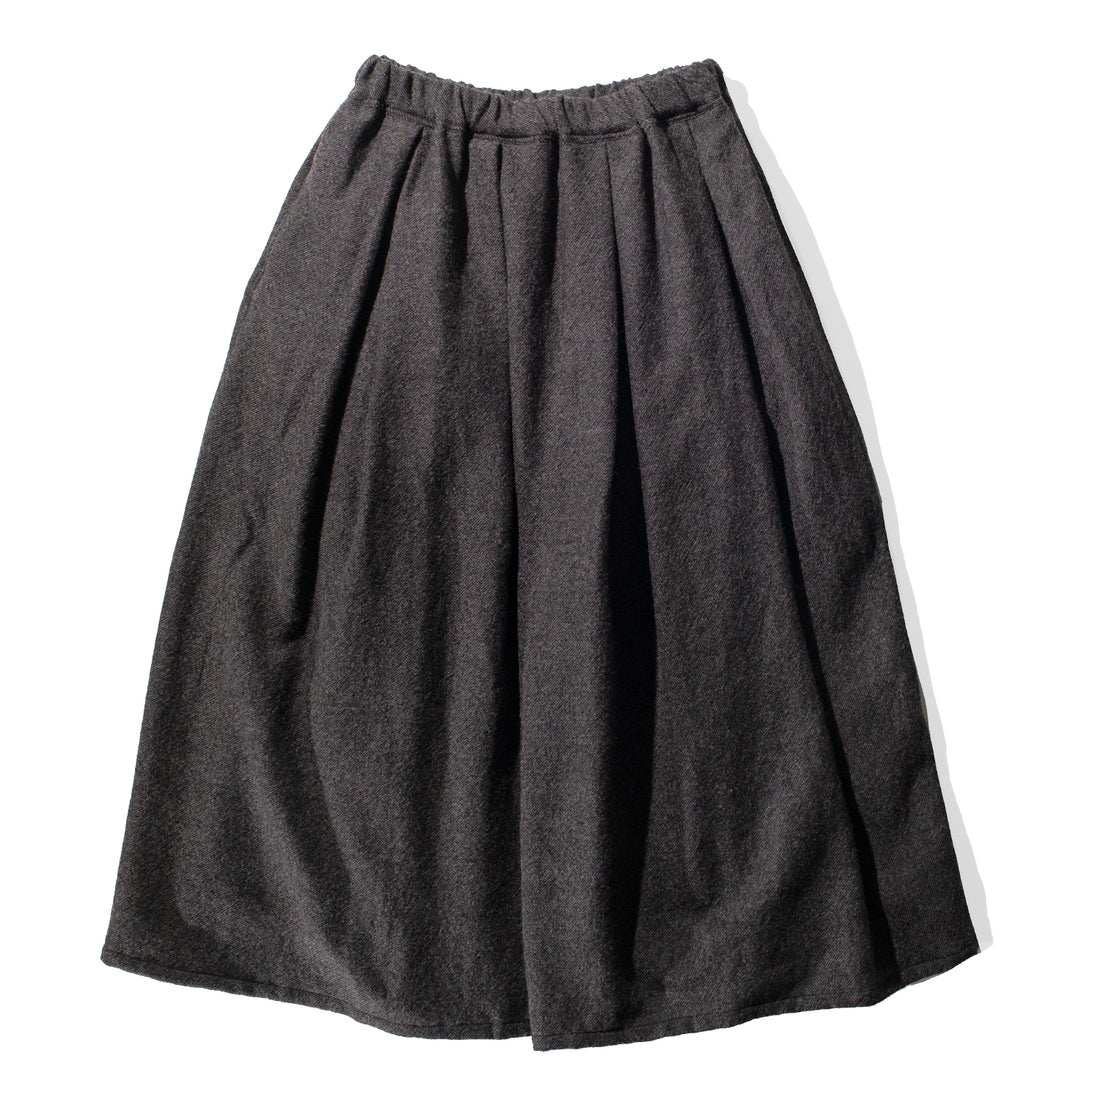 ICHI Woven Wool Skirt in Dark Brown